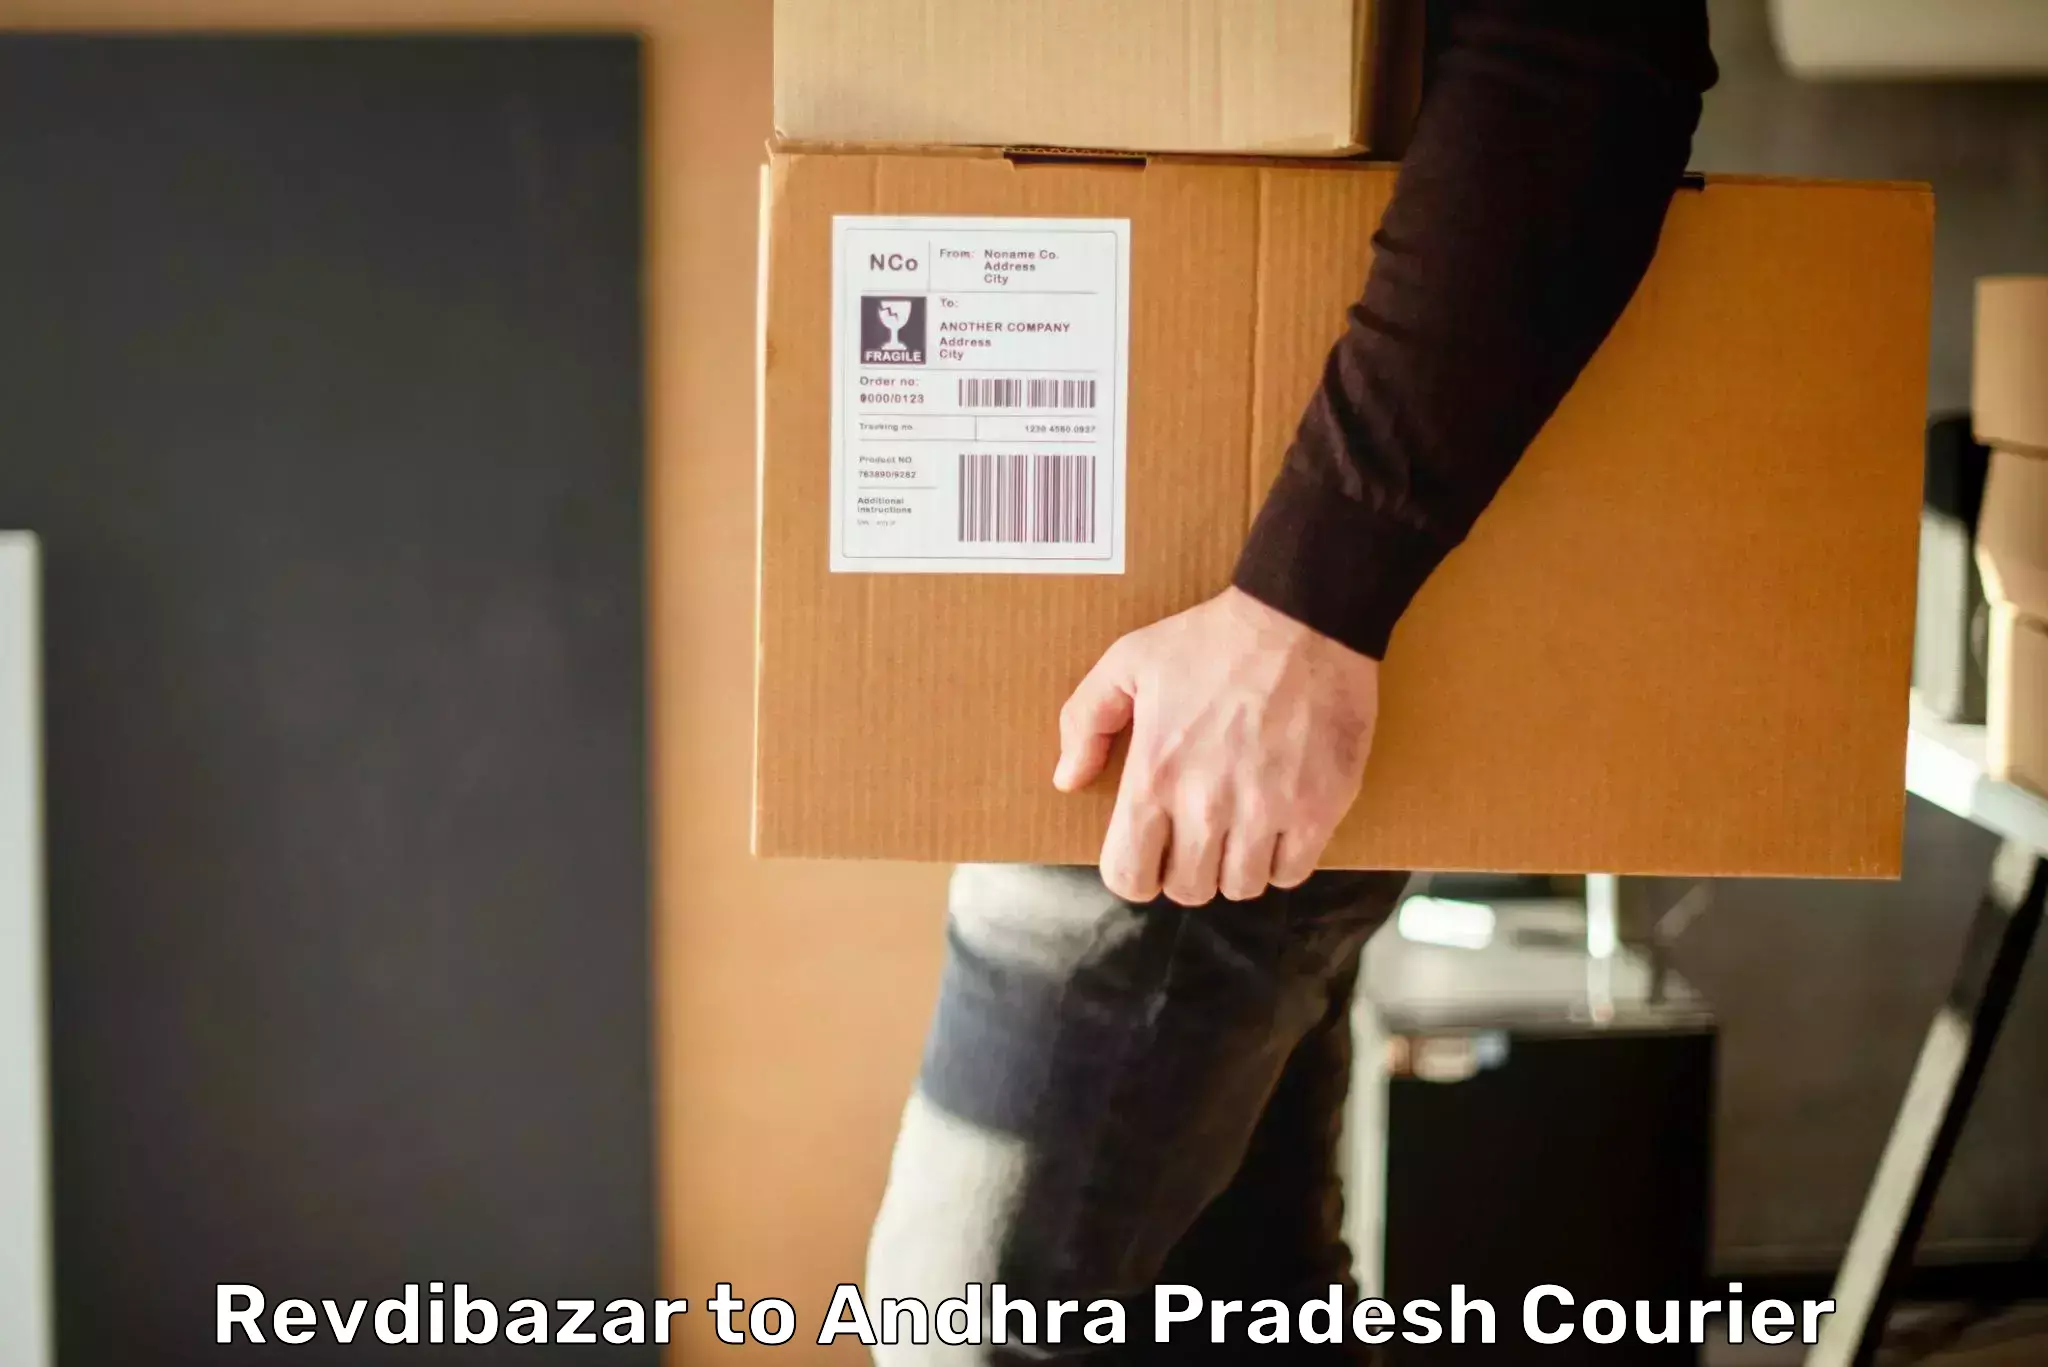 Cost-effective courier options Revdibazar to Guntur